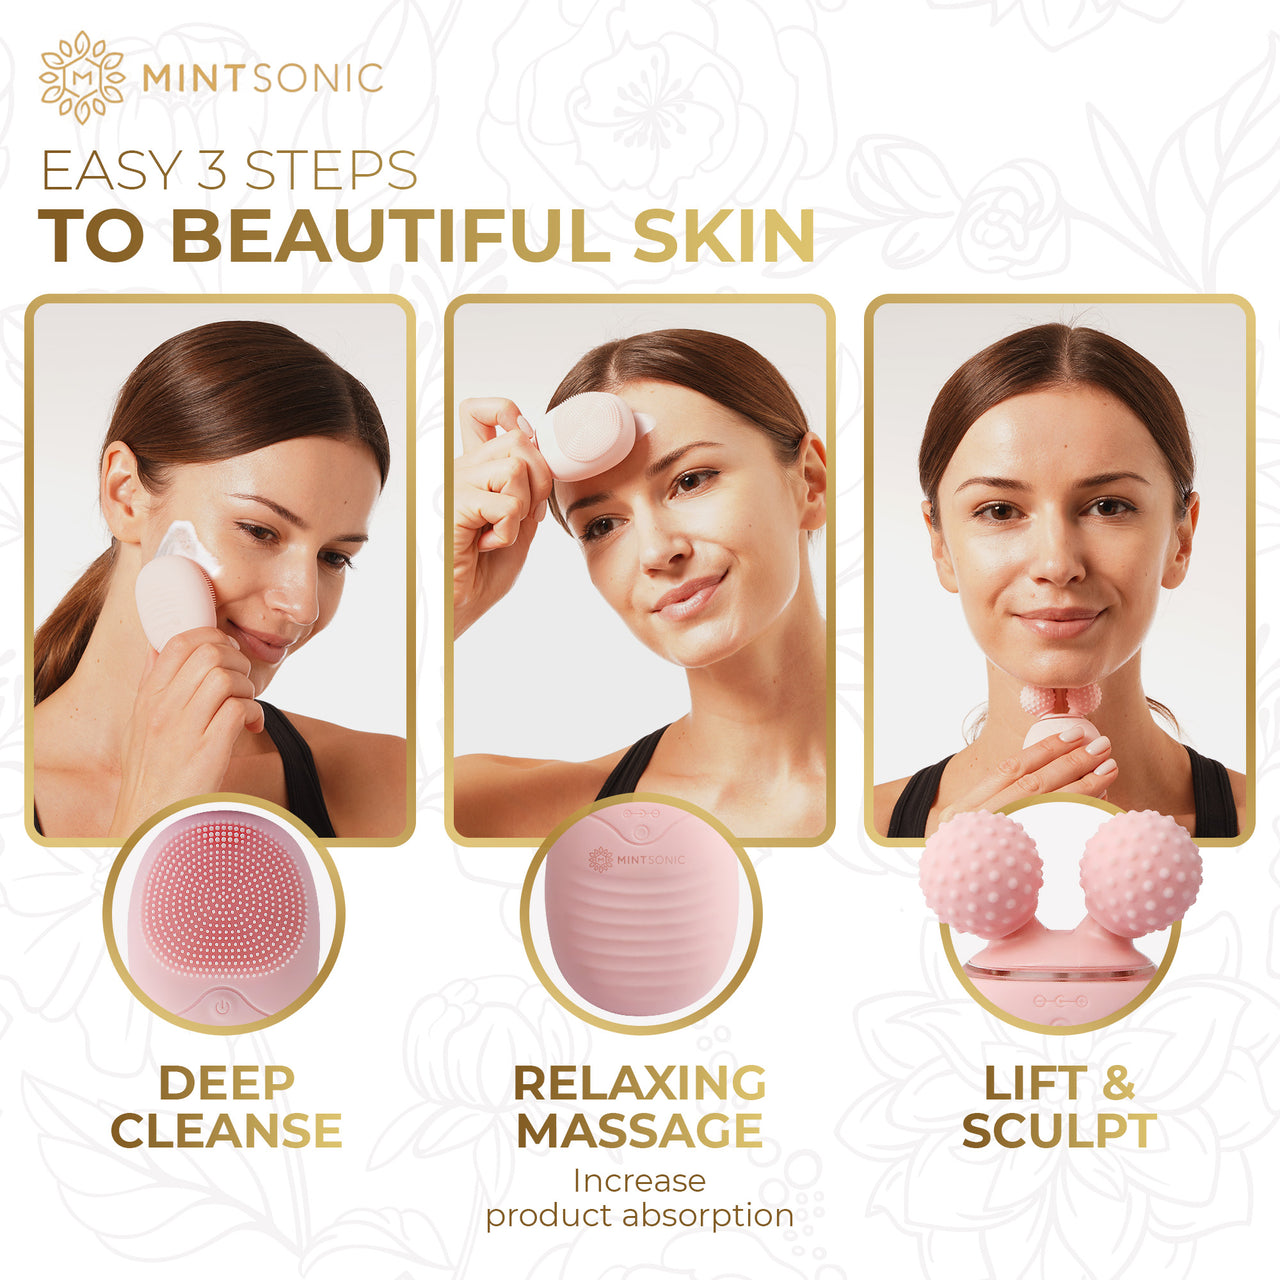 Easy 3 steps to beautiful skin